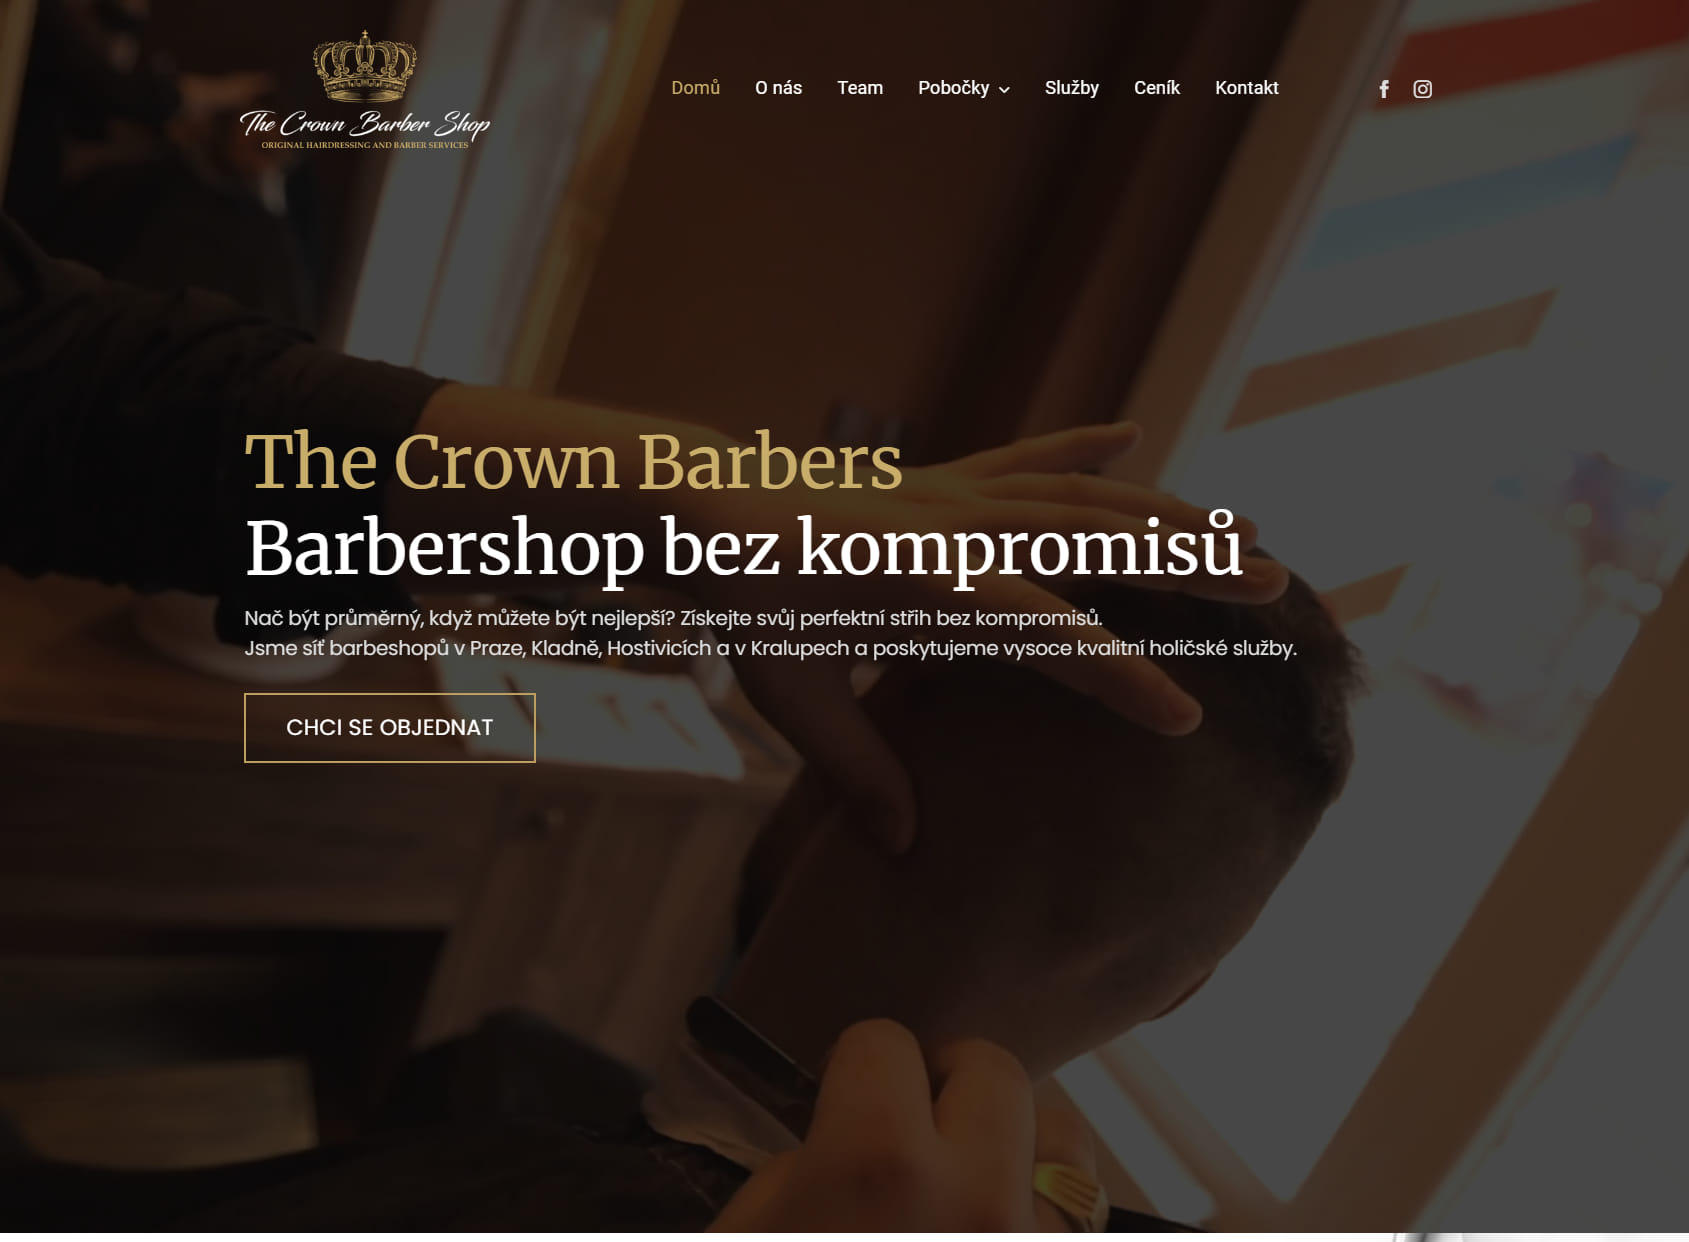 The Crown Barber Shop